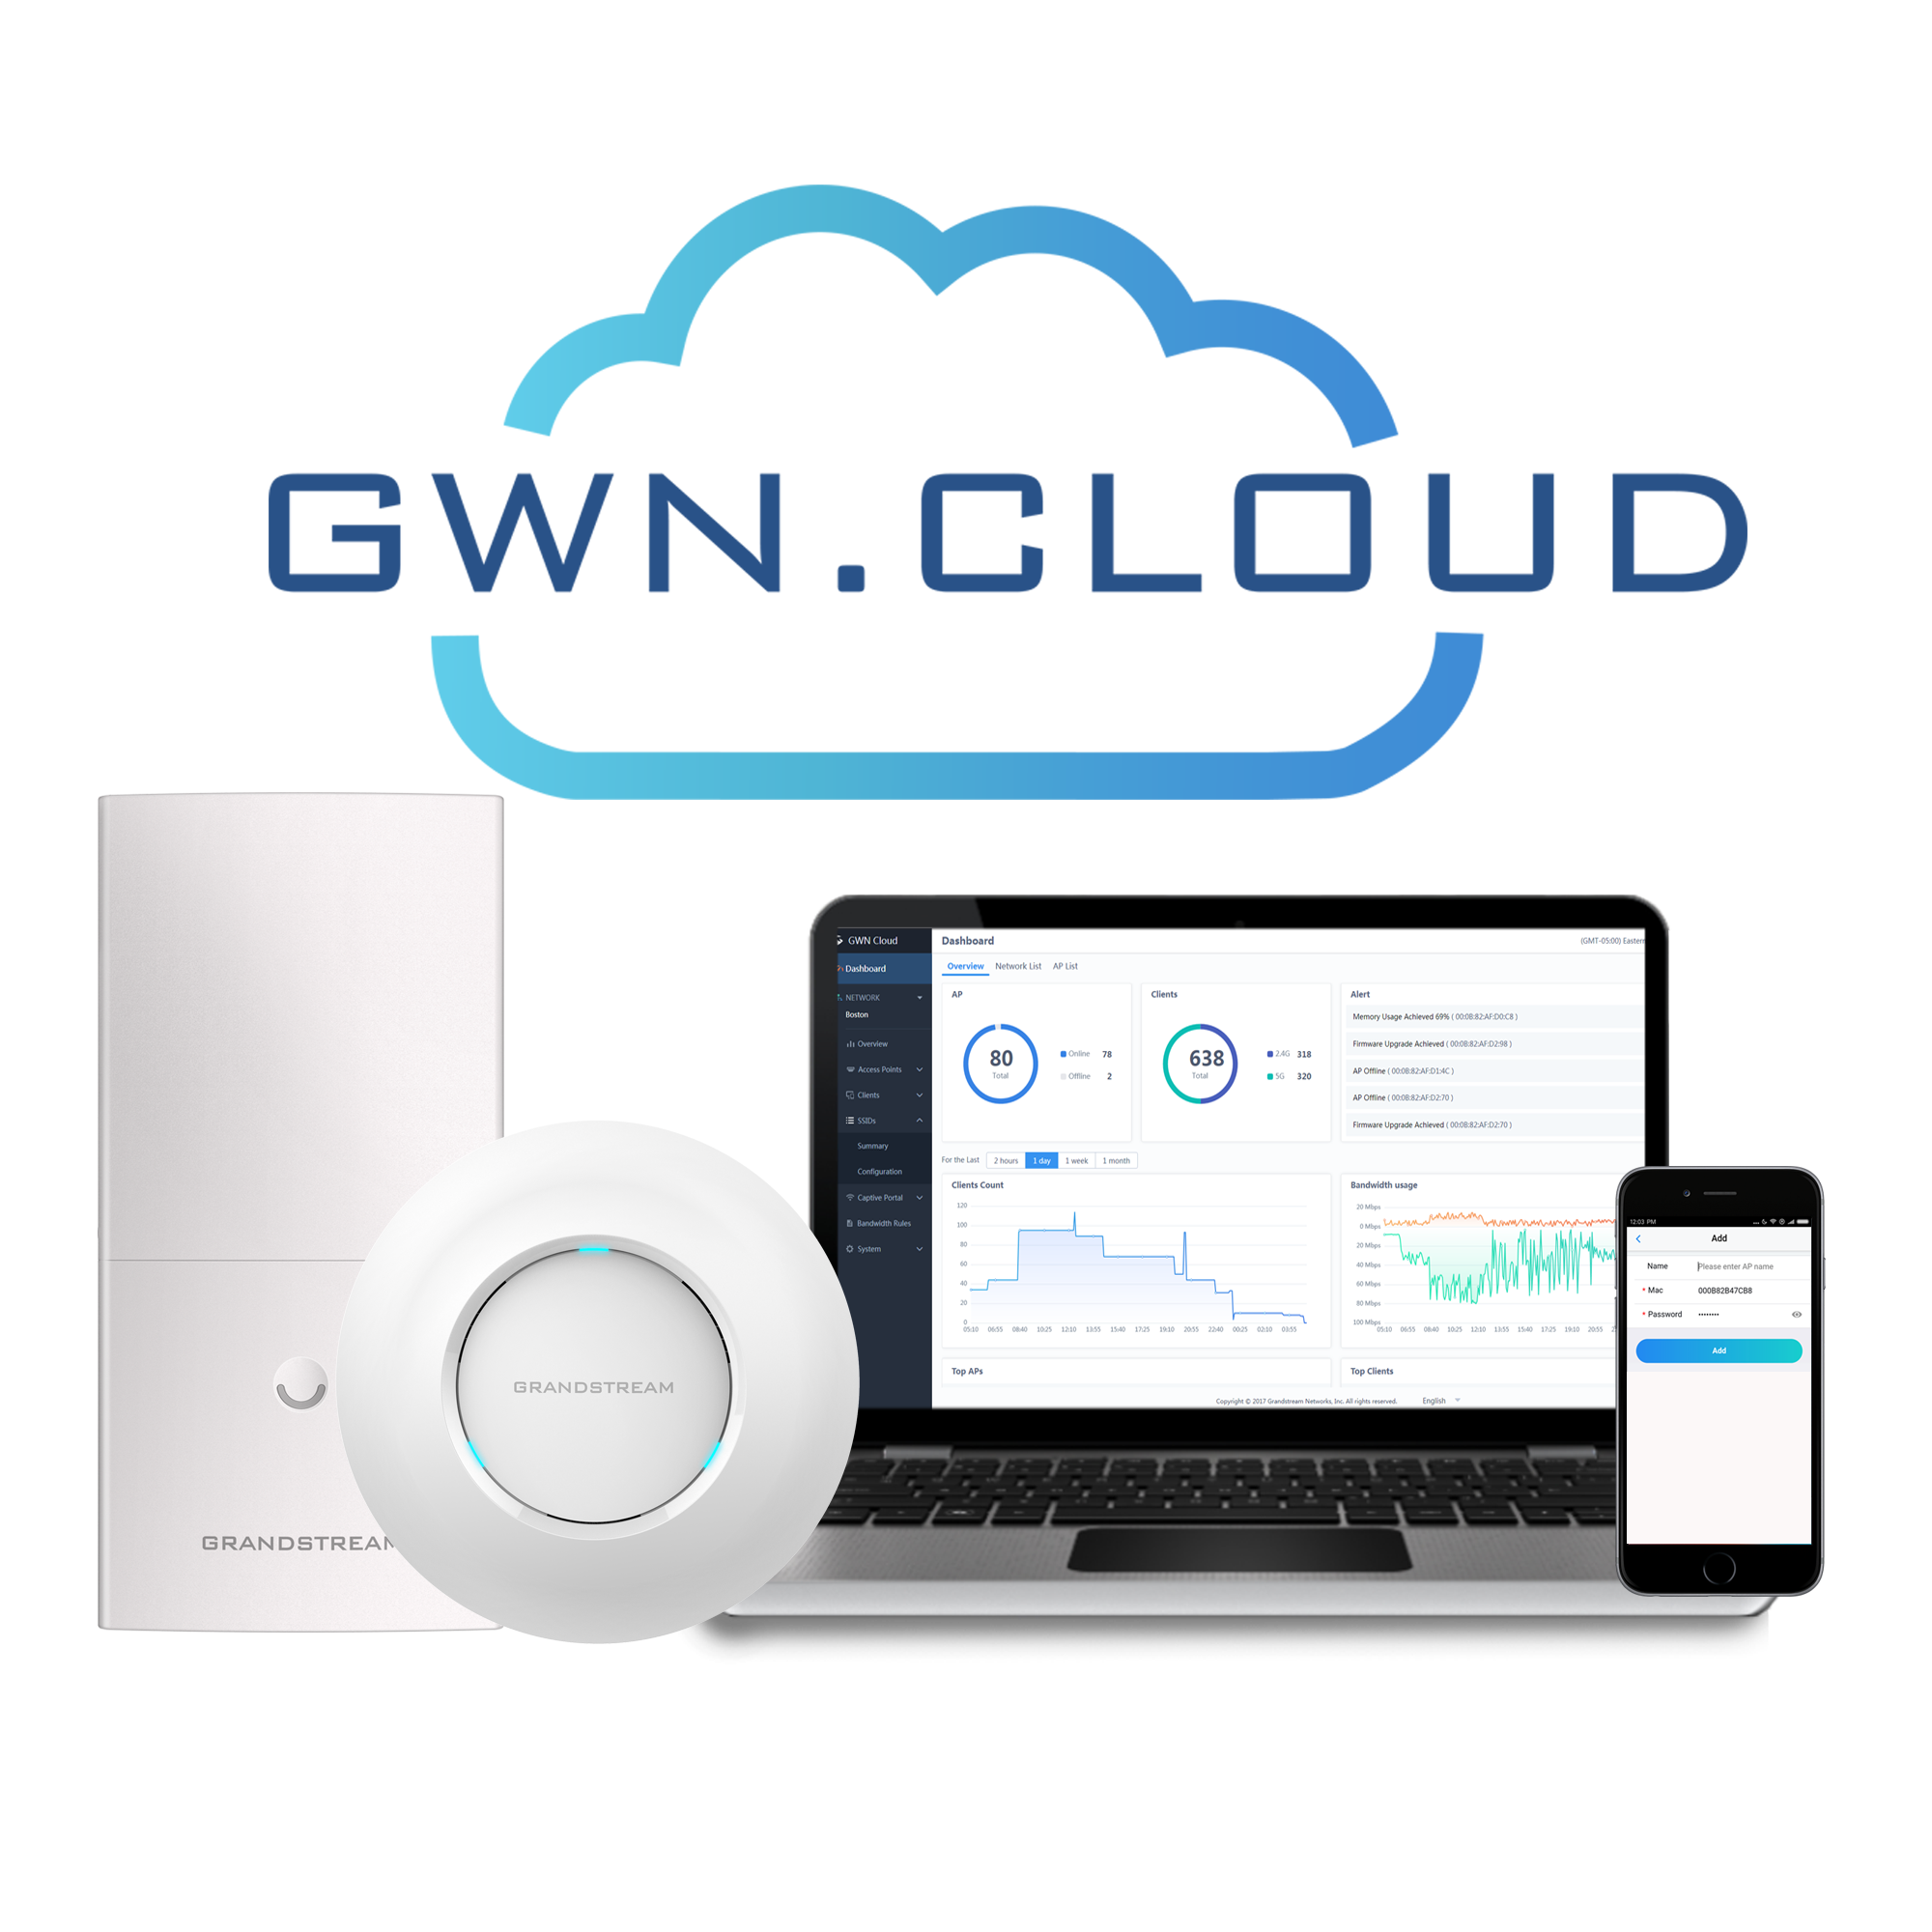 gwn cloud combinationn graphic